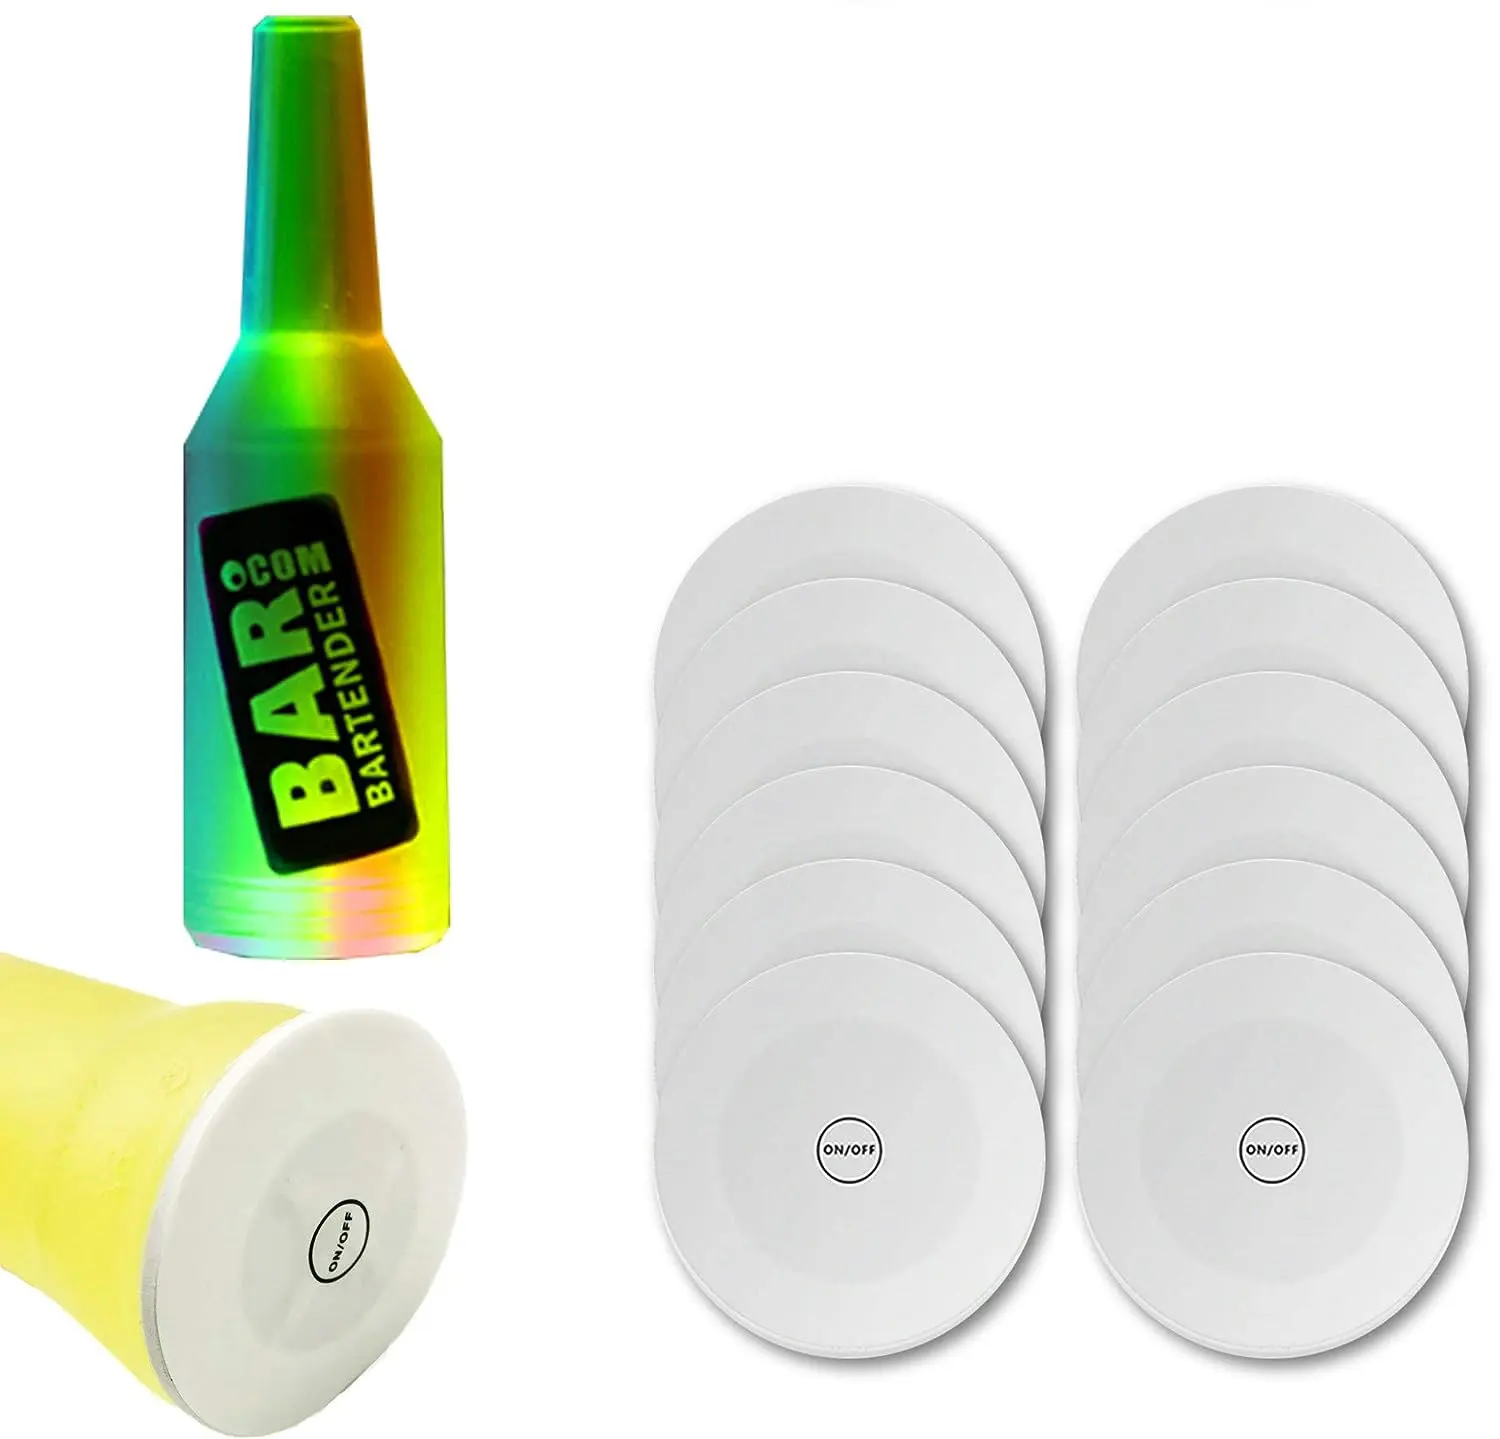 

36pcs 3mm 4LEDs Flash Light Bulb Led Bottle Cup Mat Coaster LED Glorifier mini Glow sticker Club Bar Party Decoration-